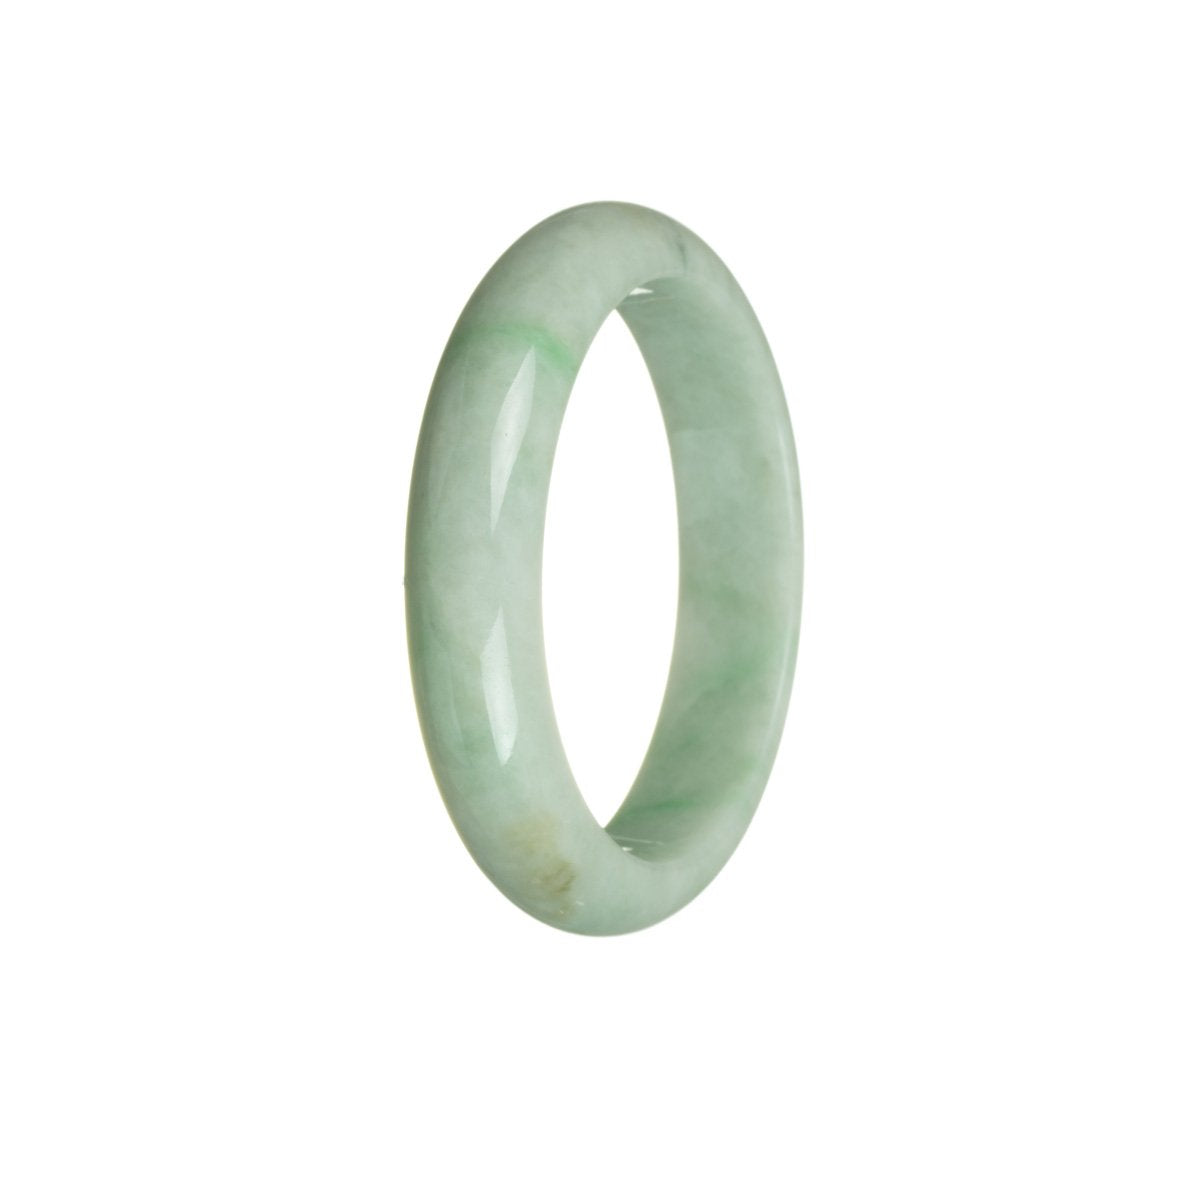 53mm Green Jadeite Jade Bangle Bracelet